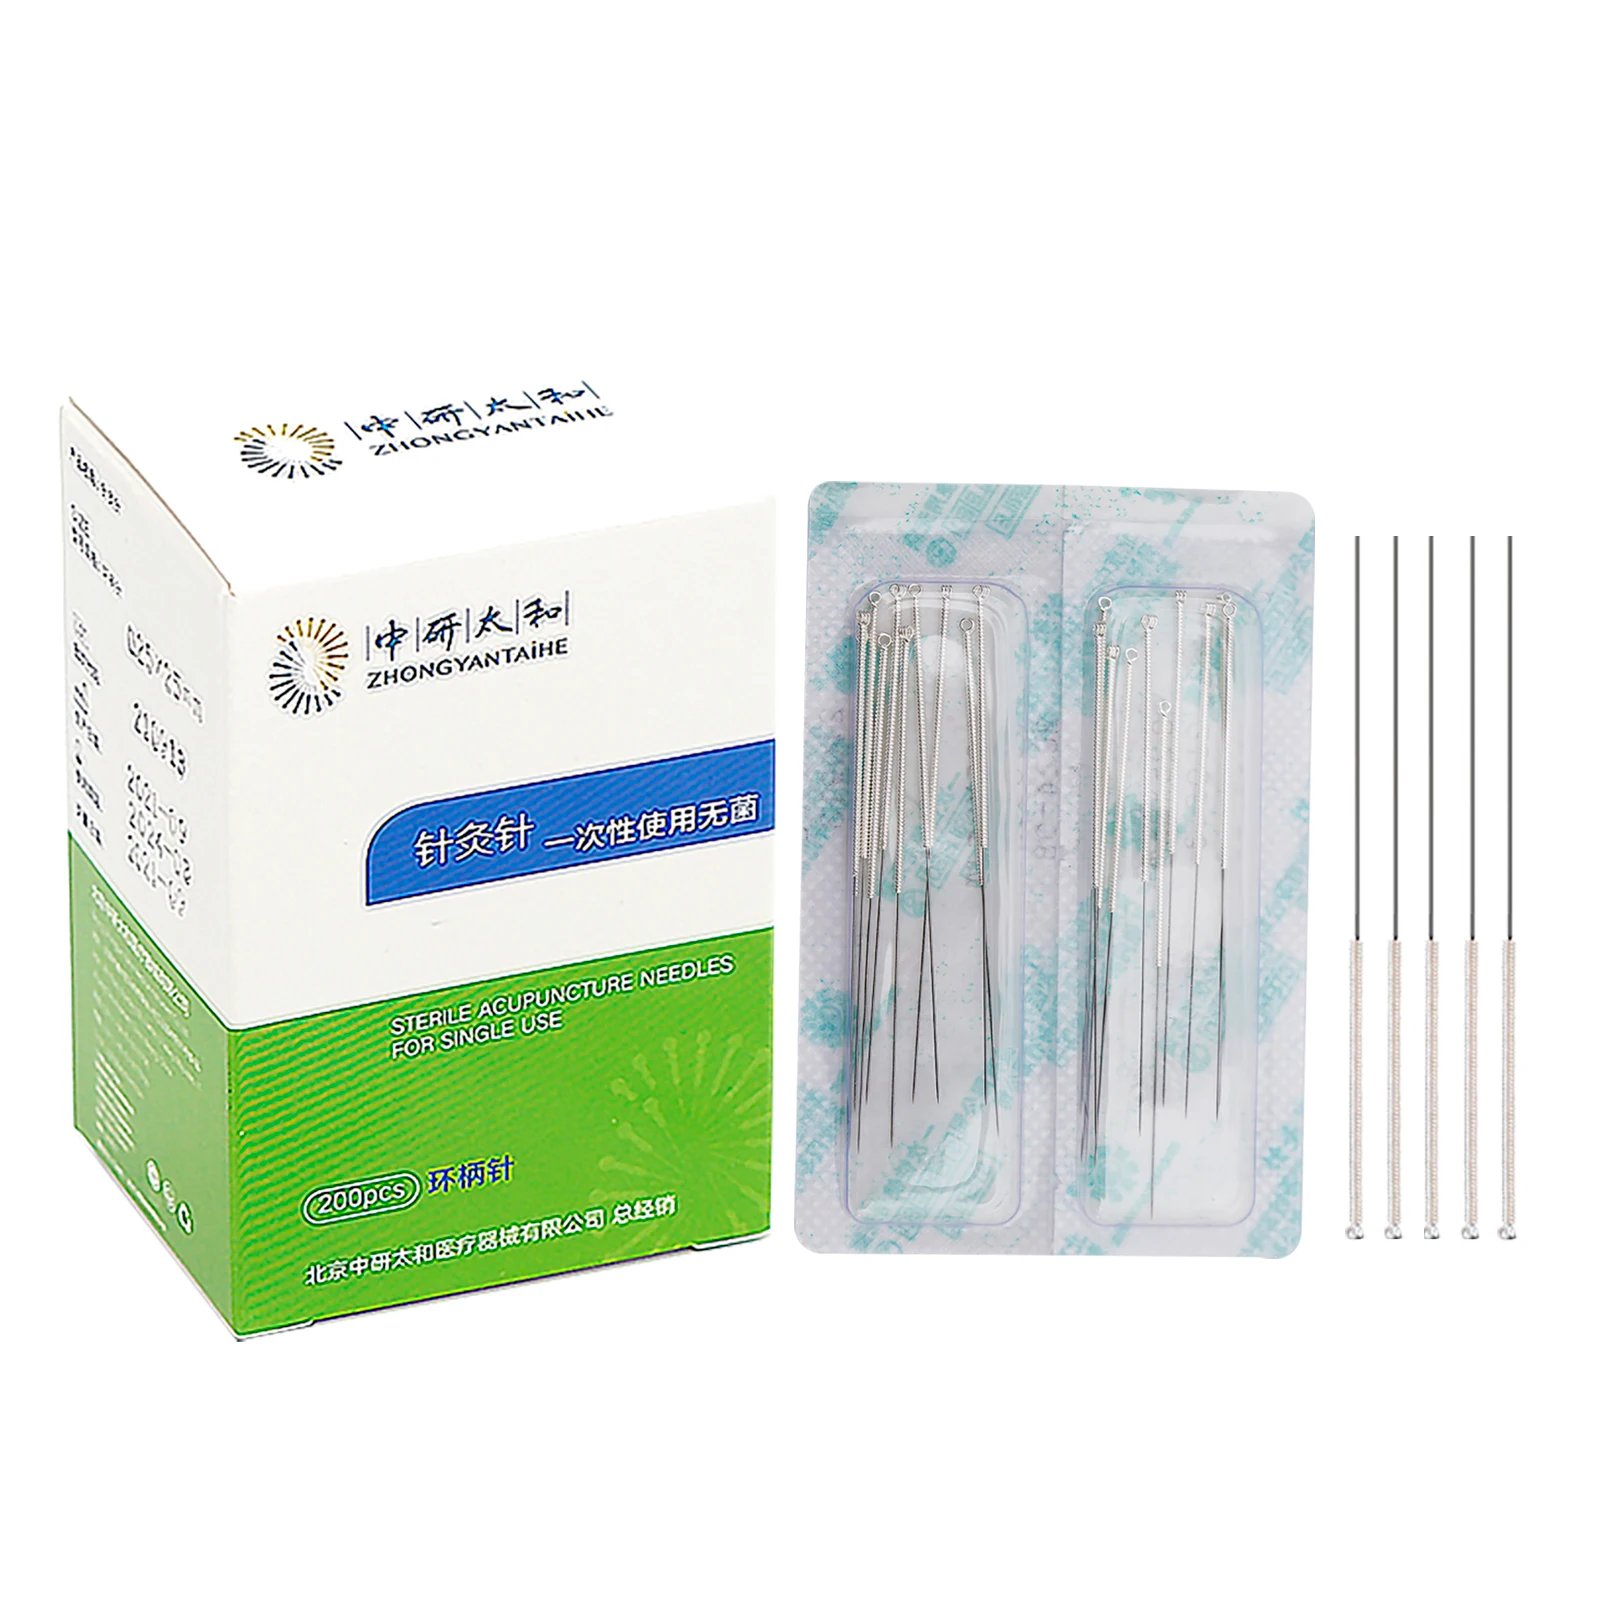 

ZHONGYAN TAIHE 200 Pcs Acupuncture Needle 0.25*25mm Silver Handle Acupuncture Disposable Sterile Beauty Massage Sterilze Needle